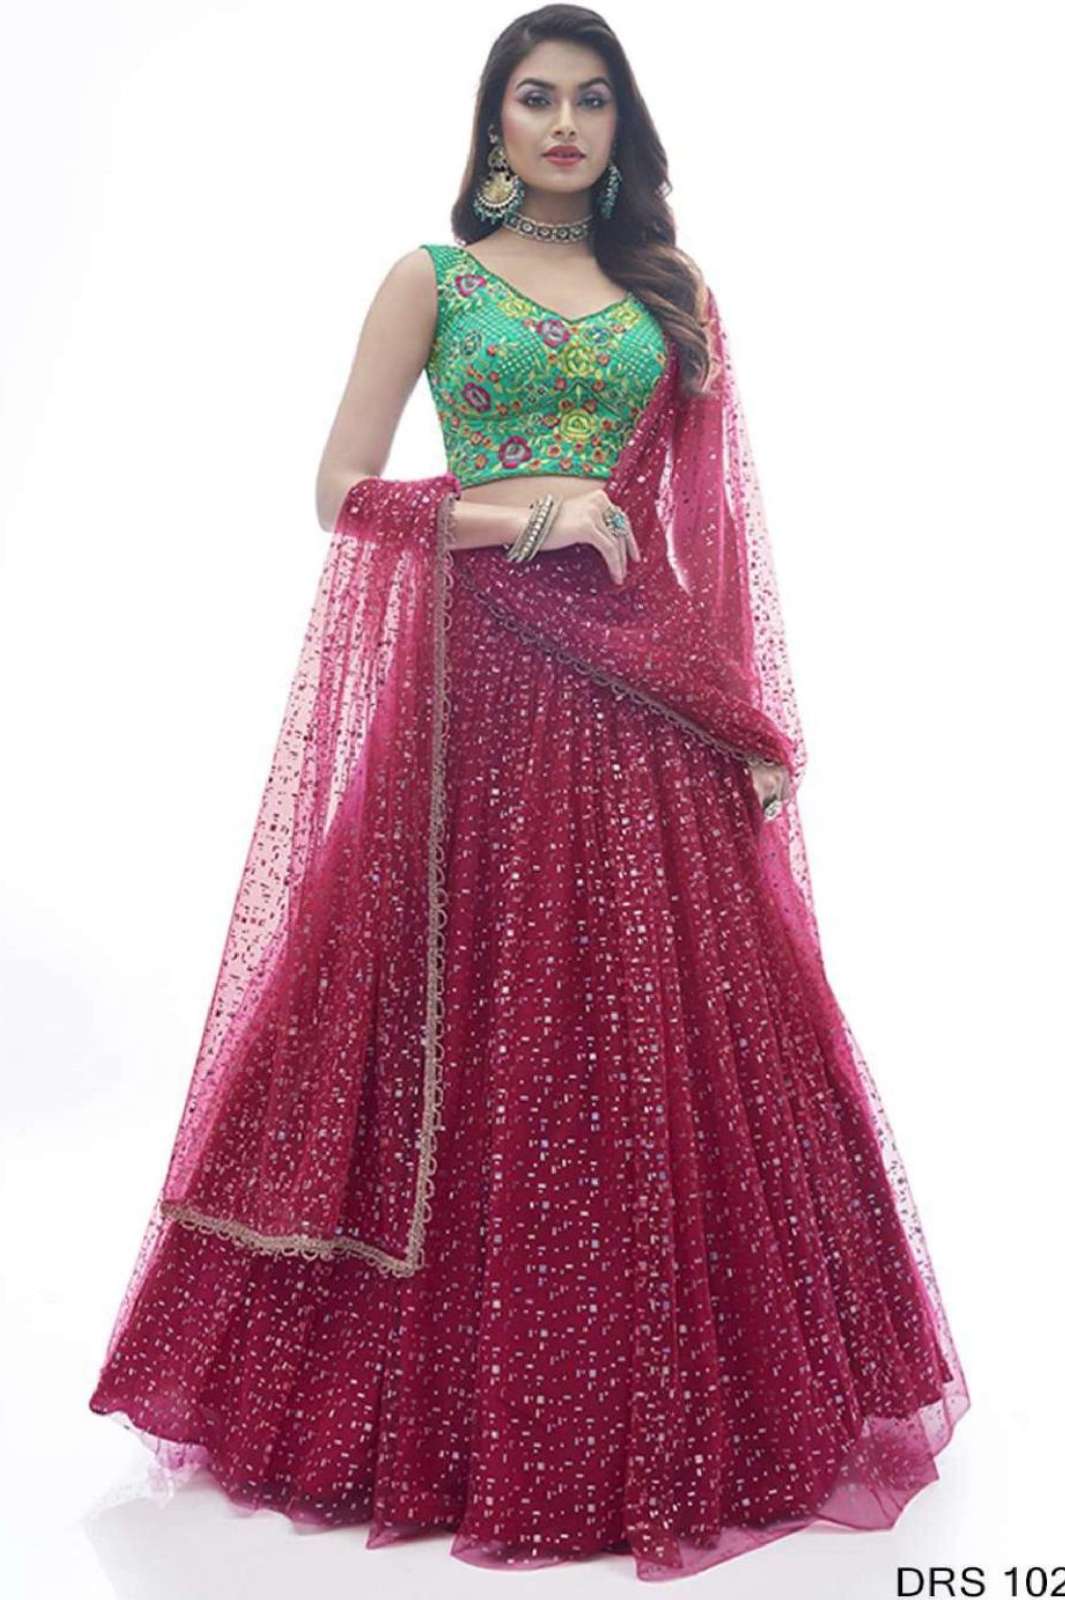 Dresstive 5405 SHUBHRA VOL 2 printed designer party wear lehenga choli